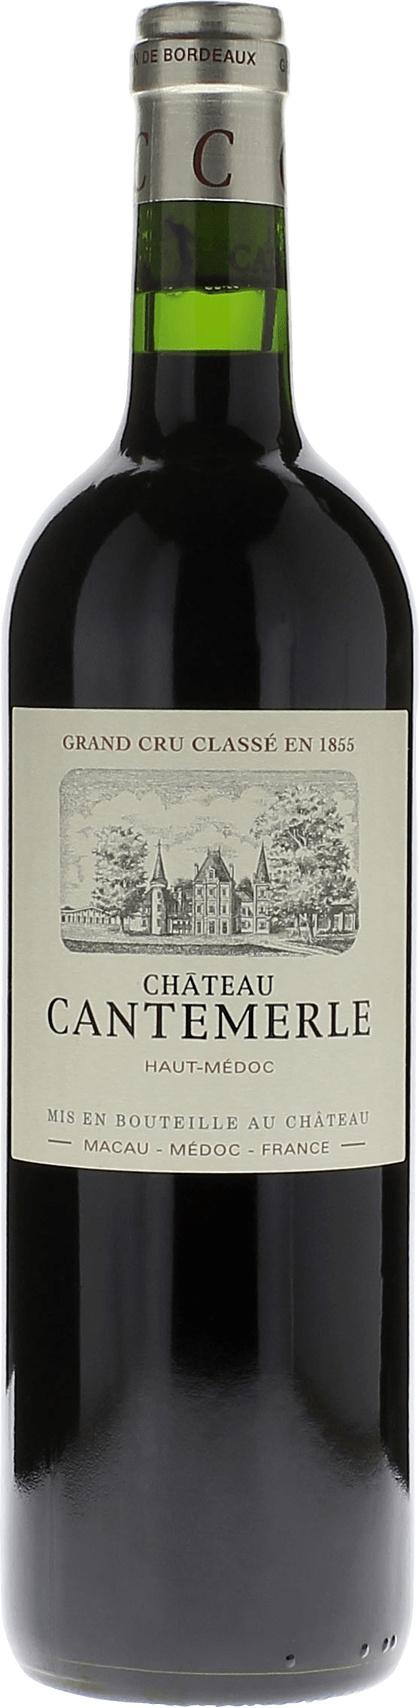 Cantemerle 2016 5me Grand cru class Mdoc, Bordeaux rouge